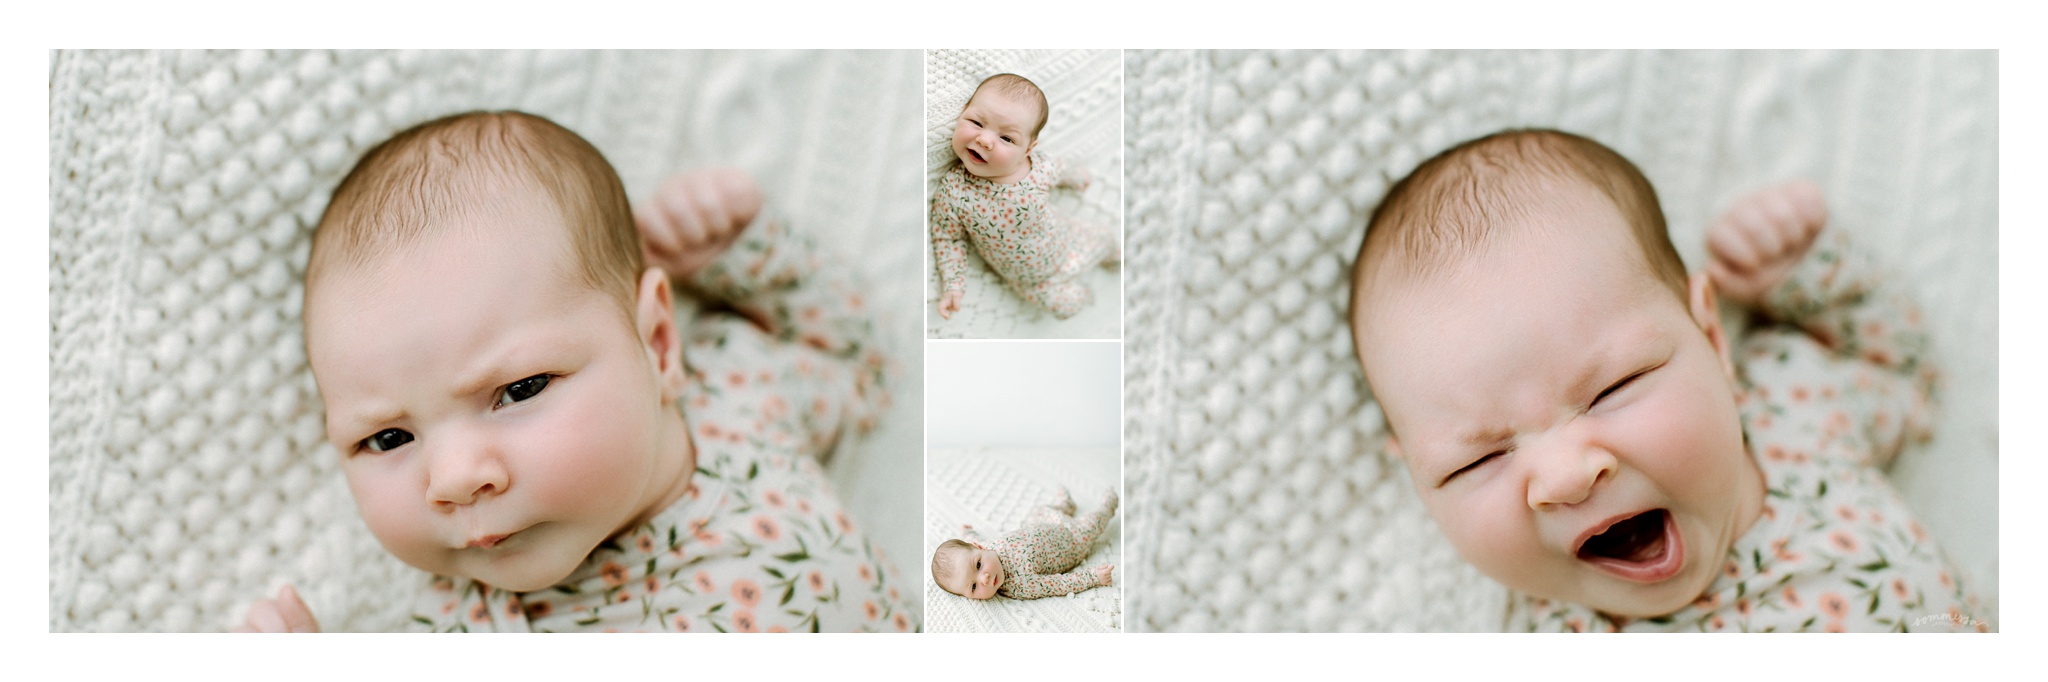 Newborn Photography in Portland, Oregon_2976.jpg